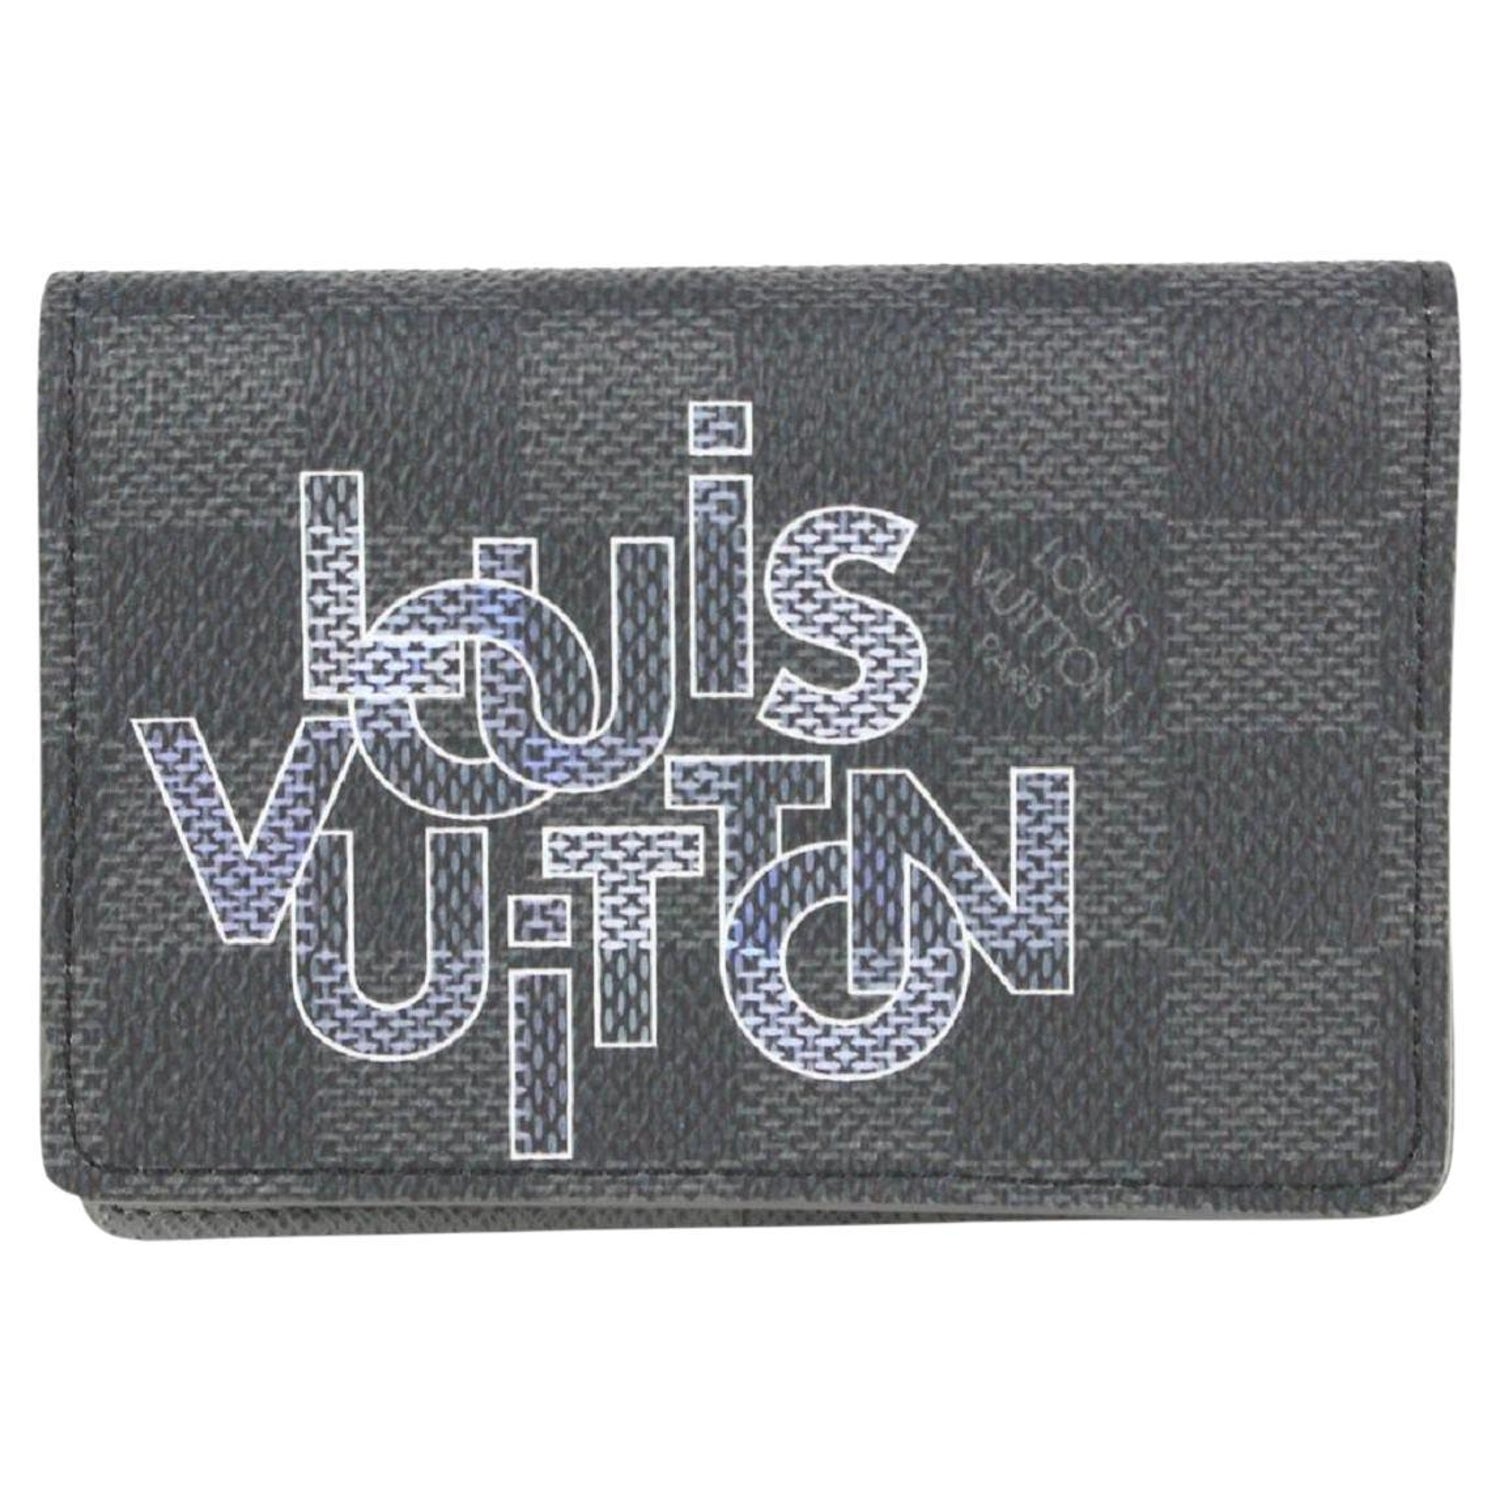 Sold at Auction: A vintage Louis Vuitton coin card holder No.7 Trunk L'oeil  monogram canvas wallet